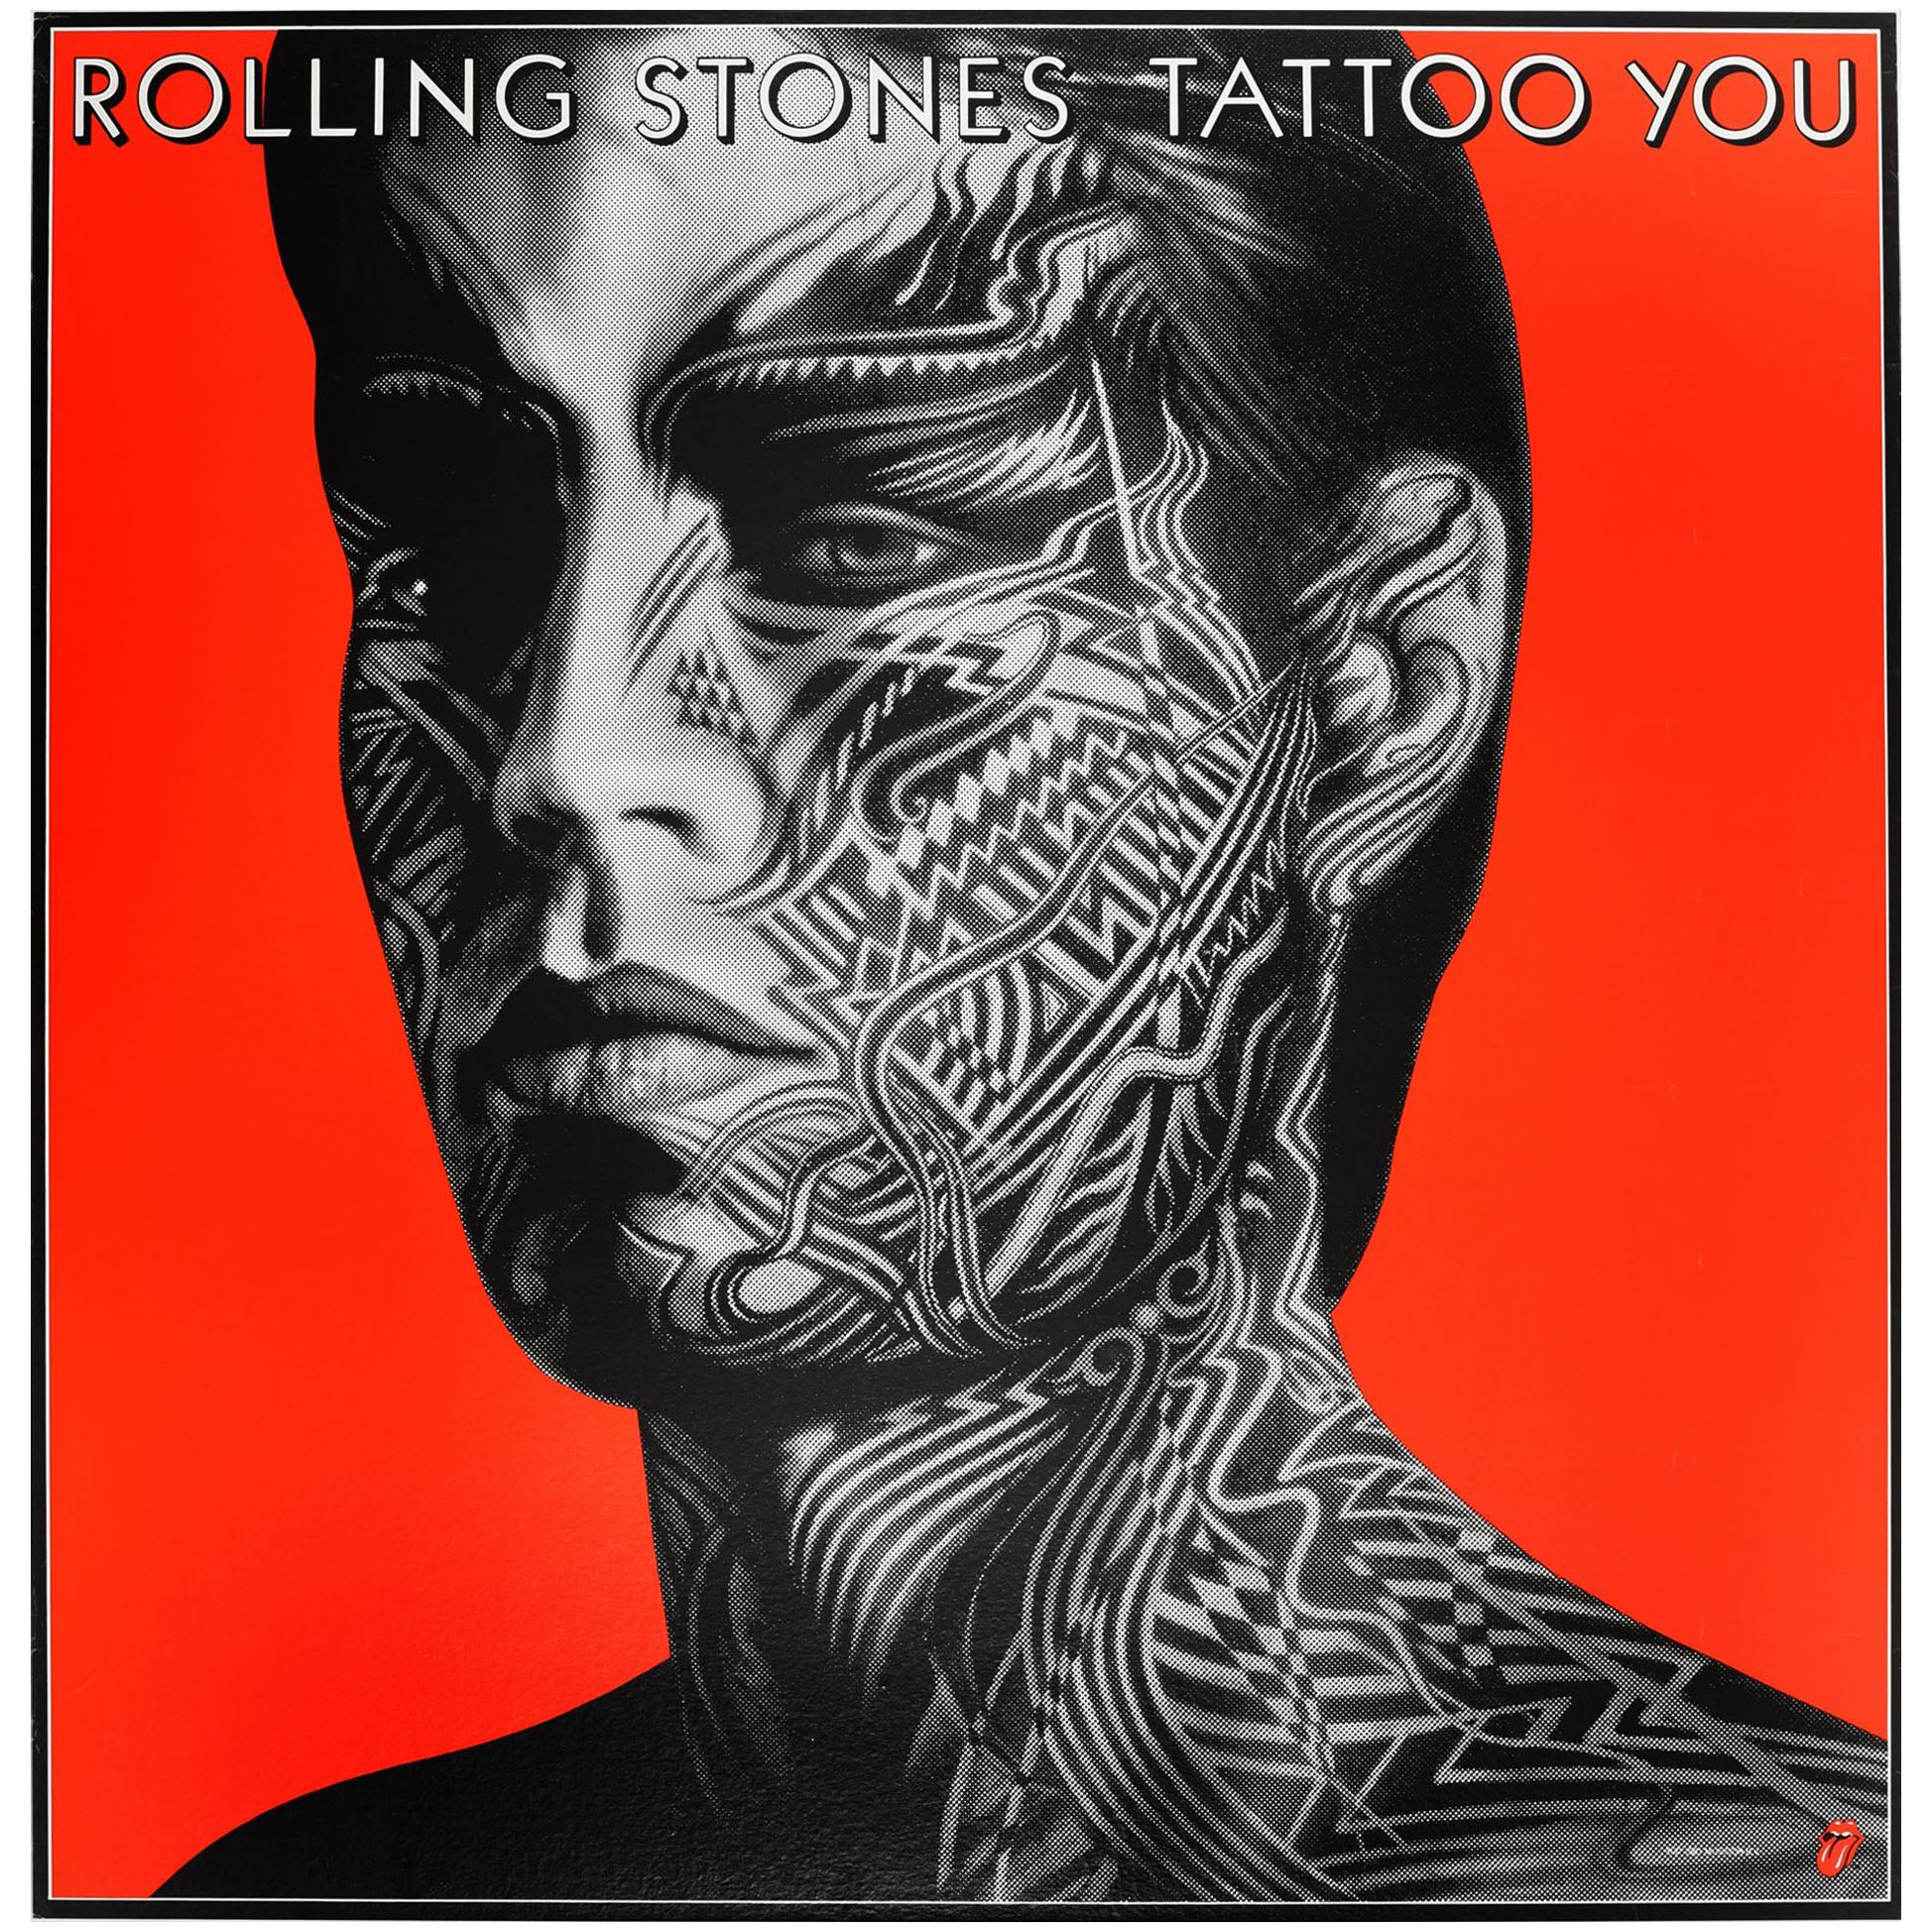 Original Vintage Mick Jagger Poster the Rolling Stones Tattoo You Album Design For Sale